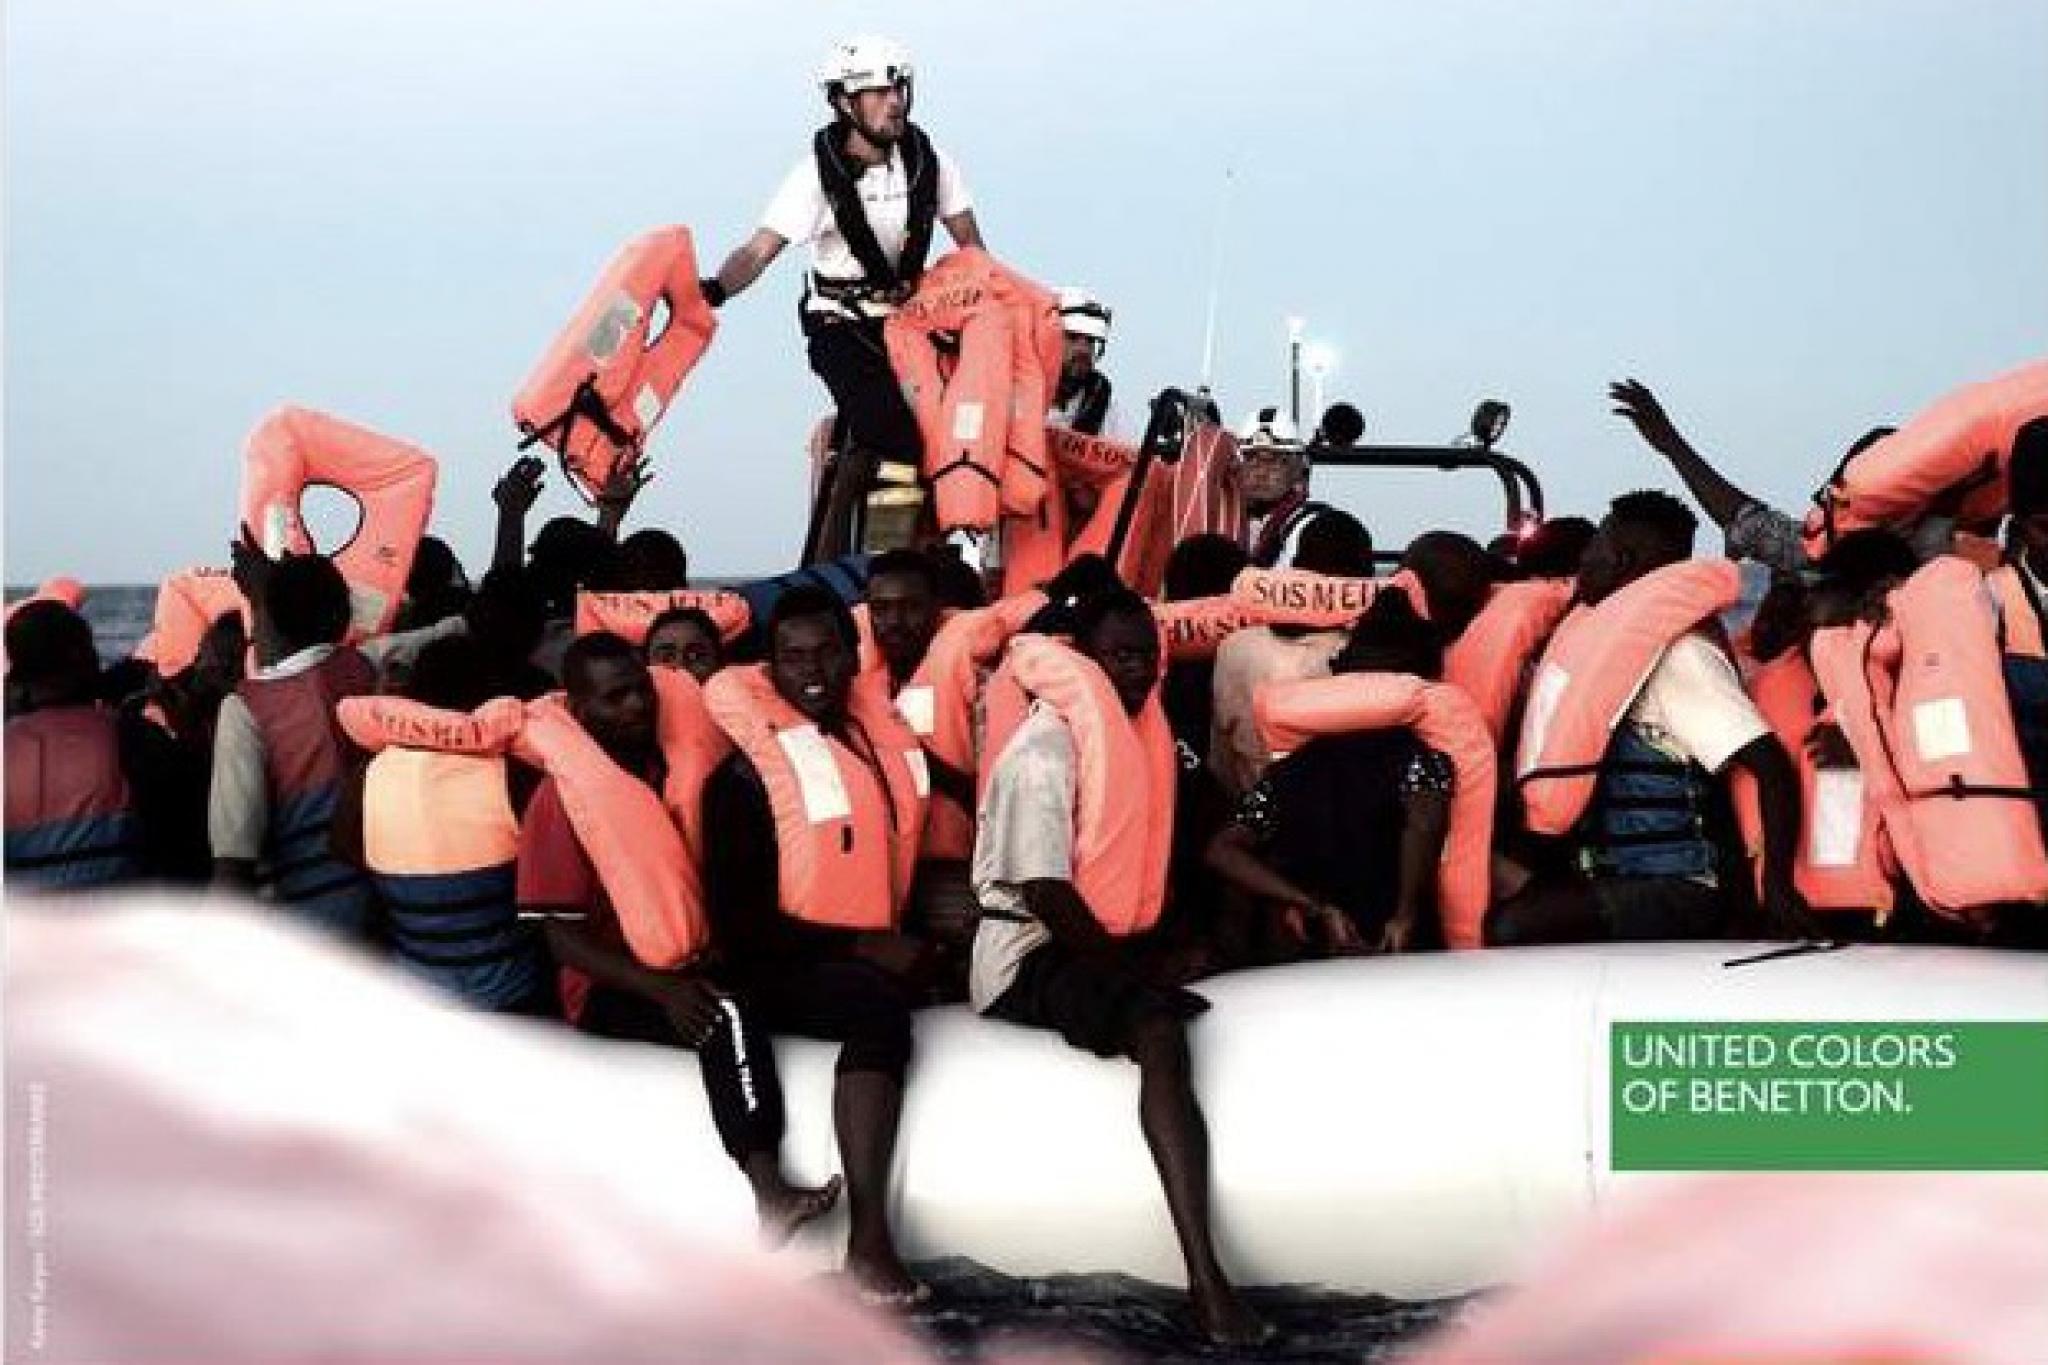 Laboratorium bout Exclusief Photos of refugees advertise Benetton